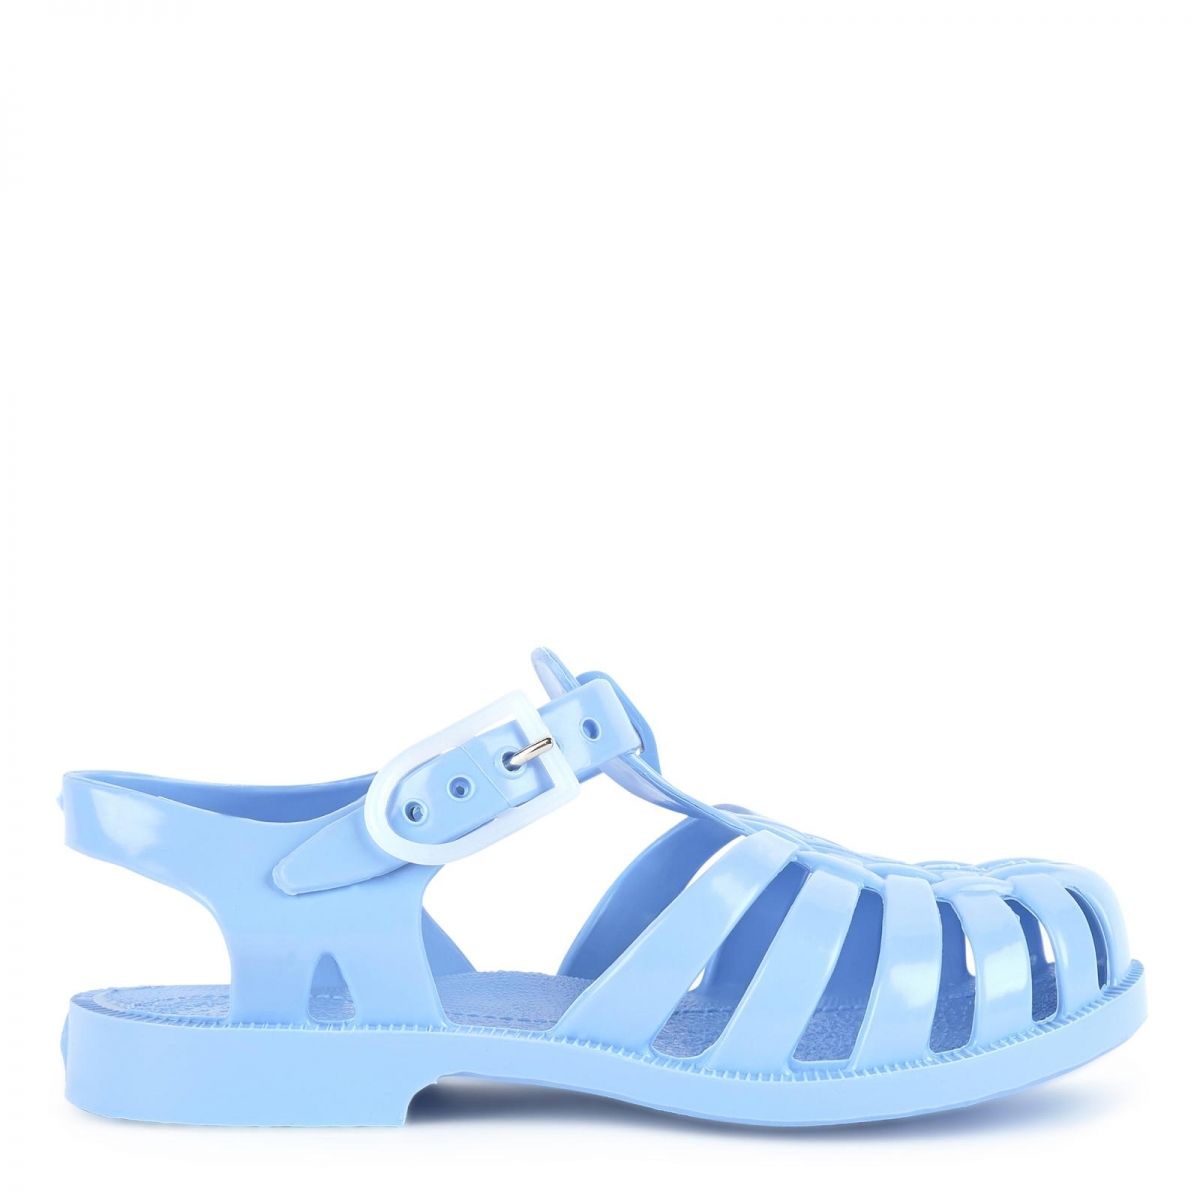 Meduse - Sandals Sun Bleu Pastel blue - Sandalias - 607852